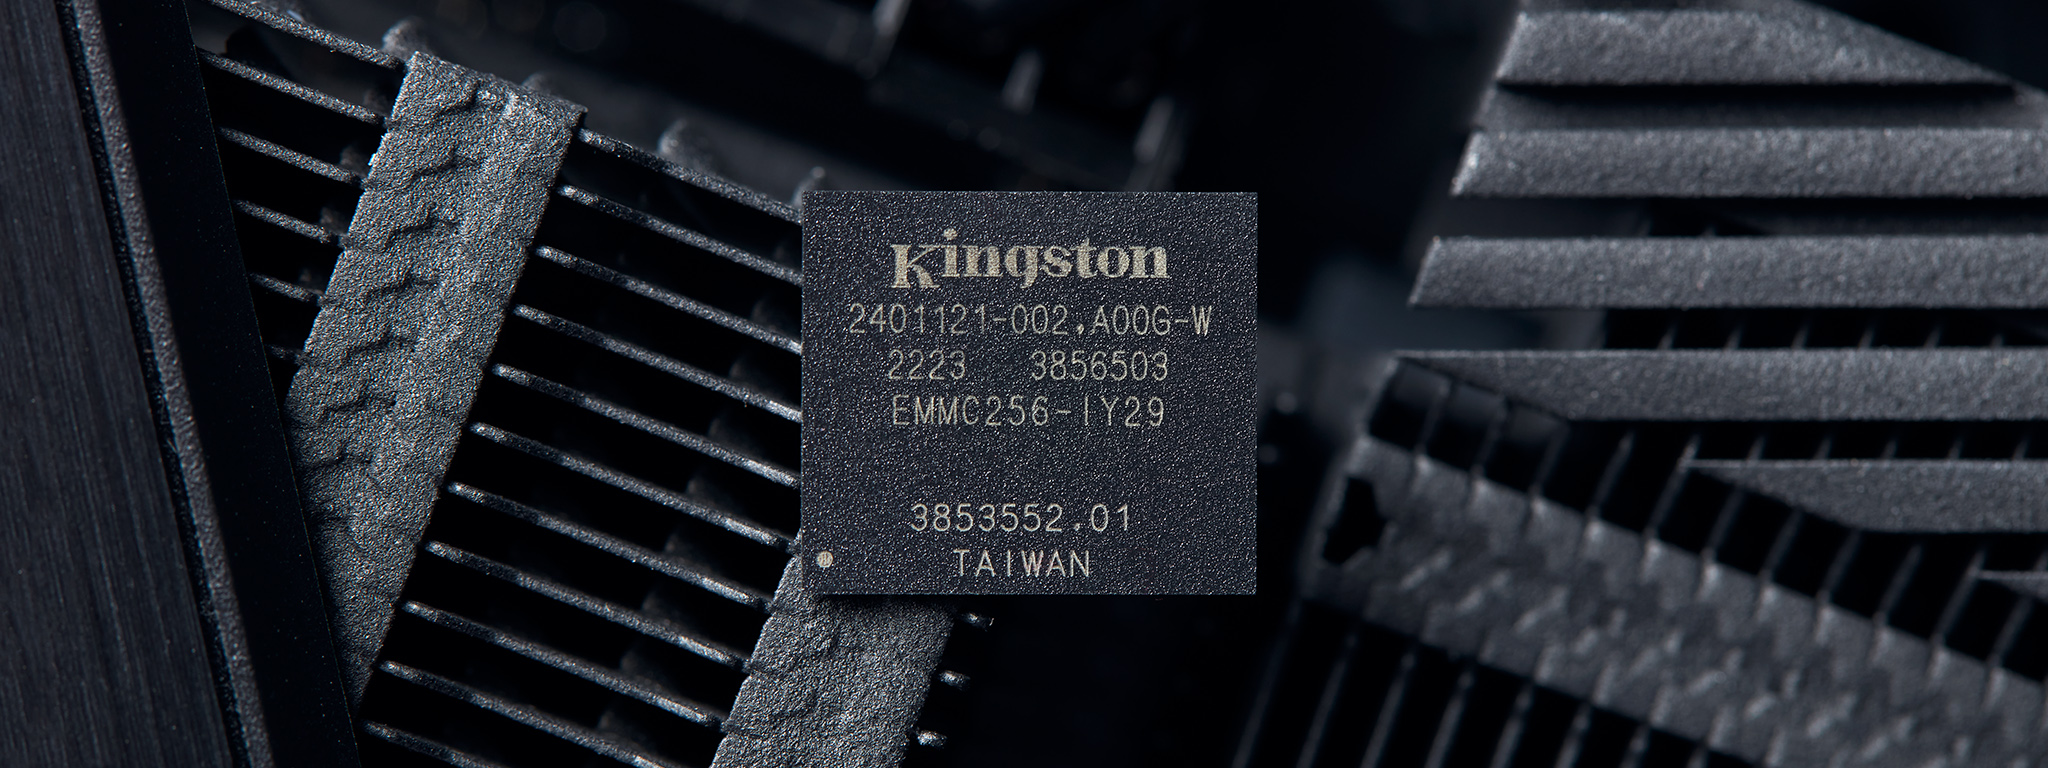 Unit eMMC Kingston dengan latar belakang casing komputer hitam.